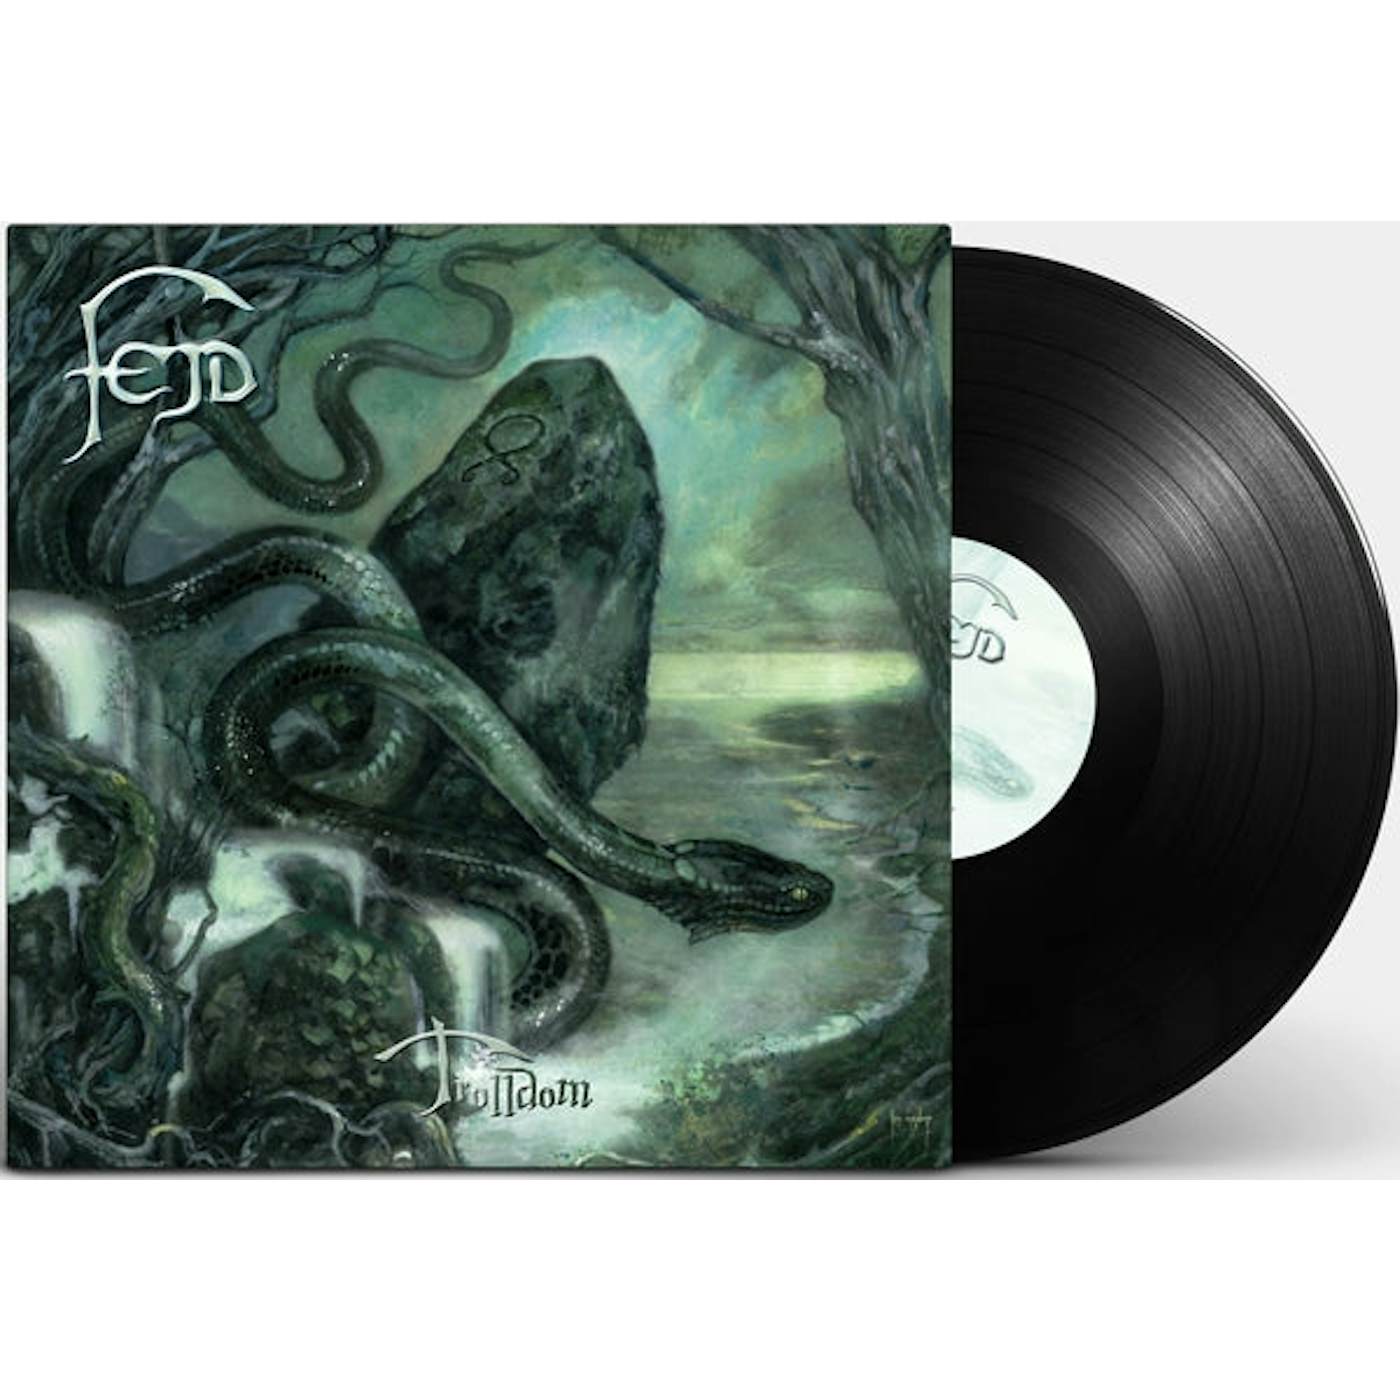 Fejd LP - Trolldom (Vinyl)